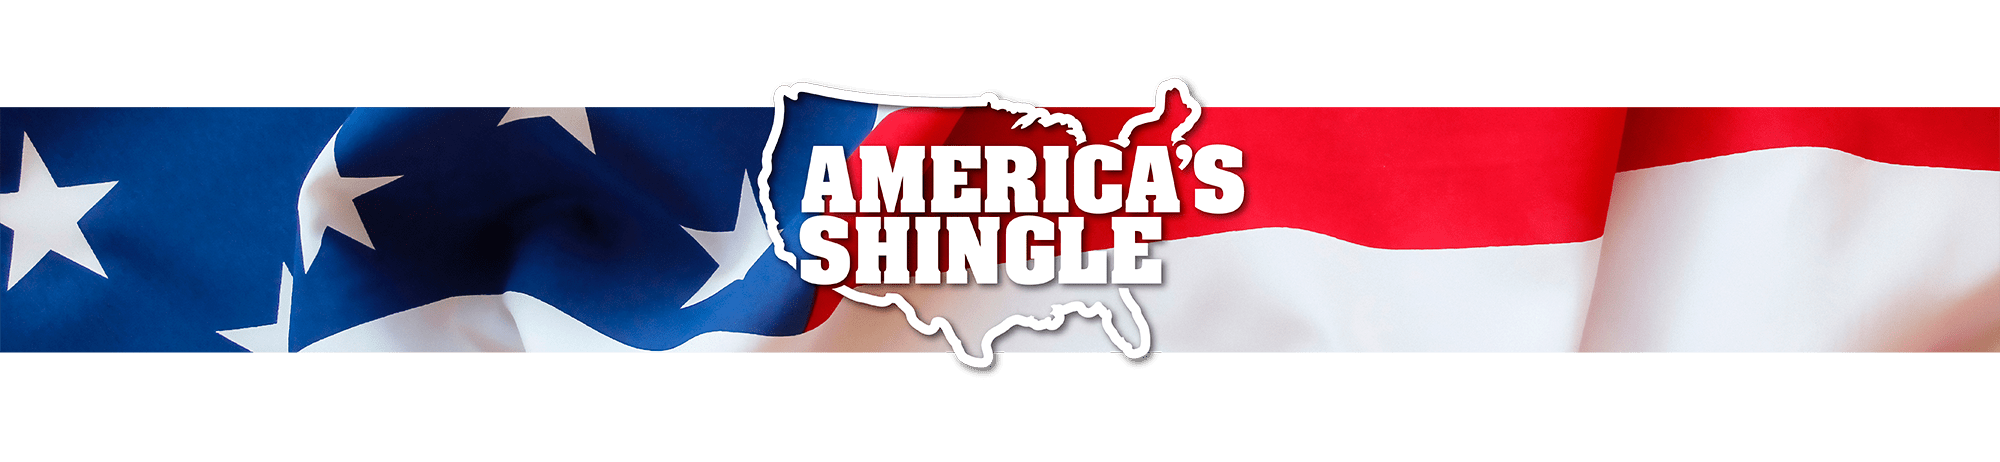 America's Shingle